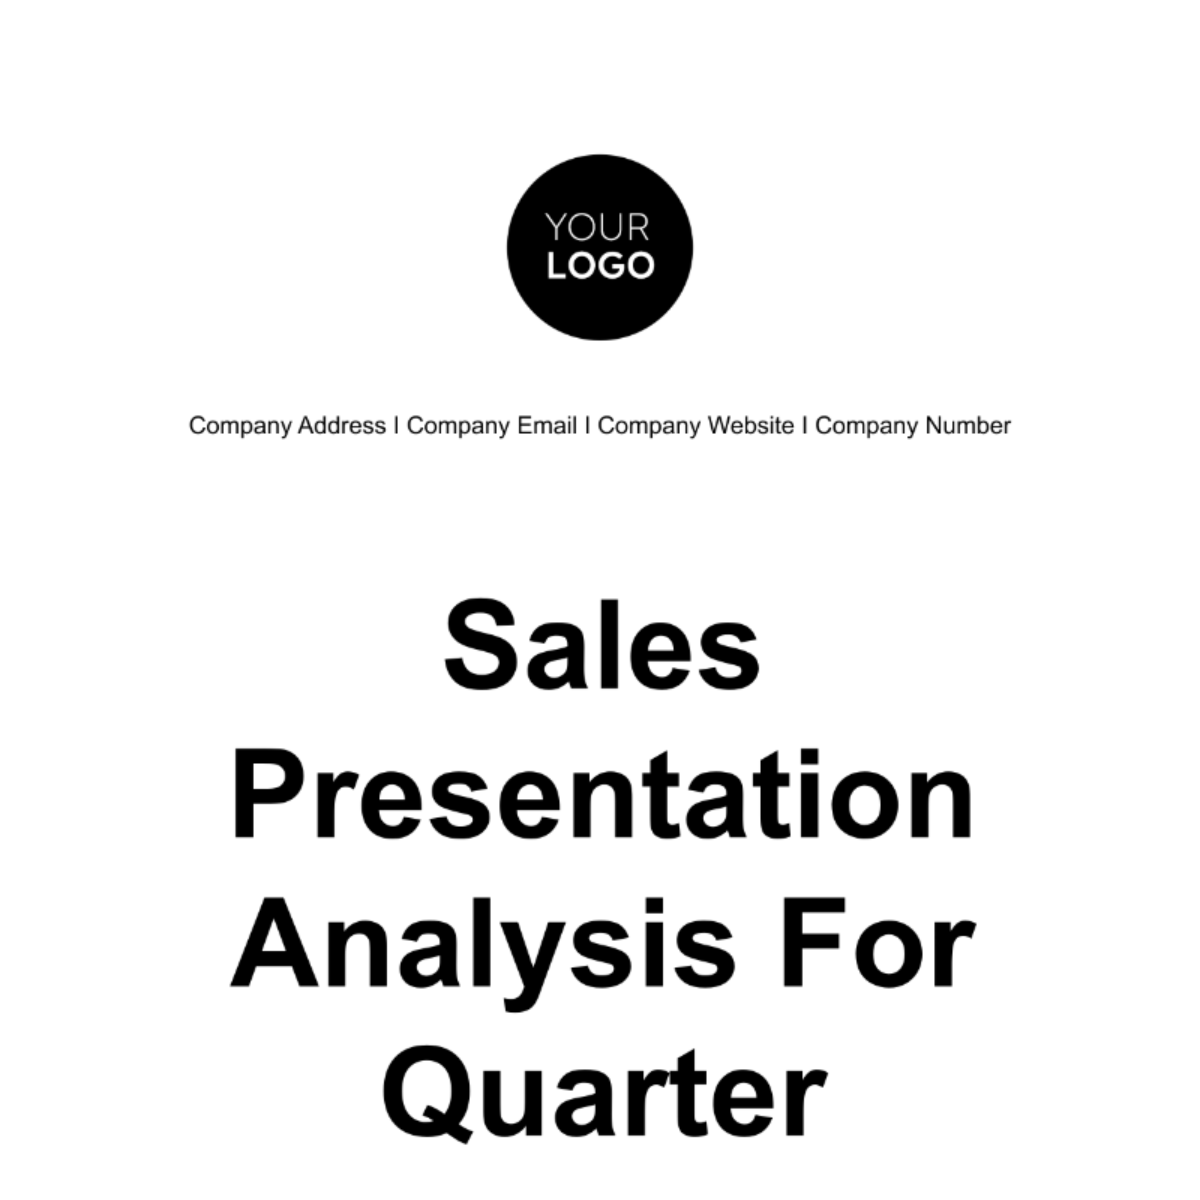 Free Sales Presentation Analysis for Quarter Template